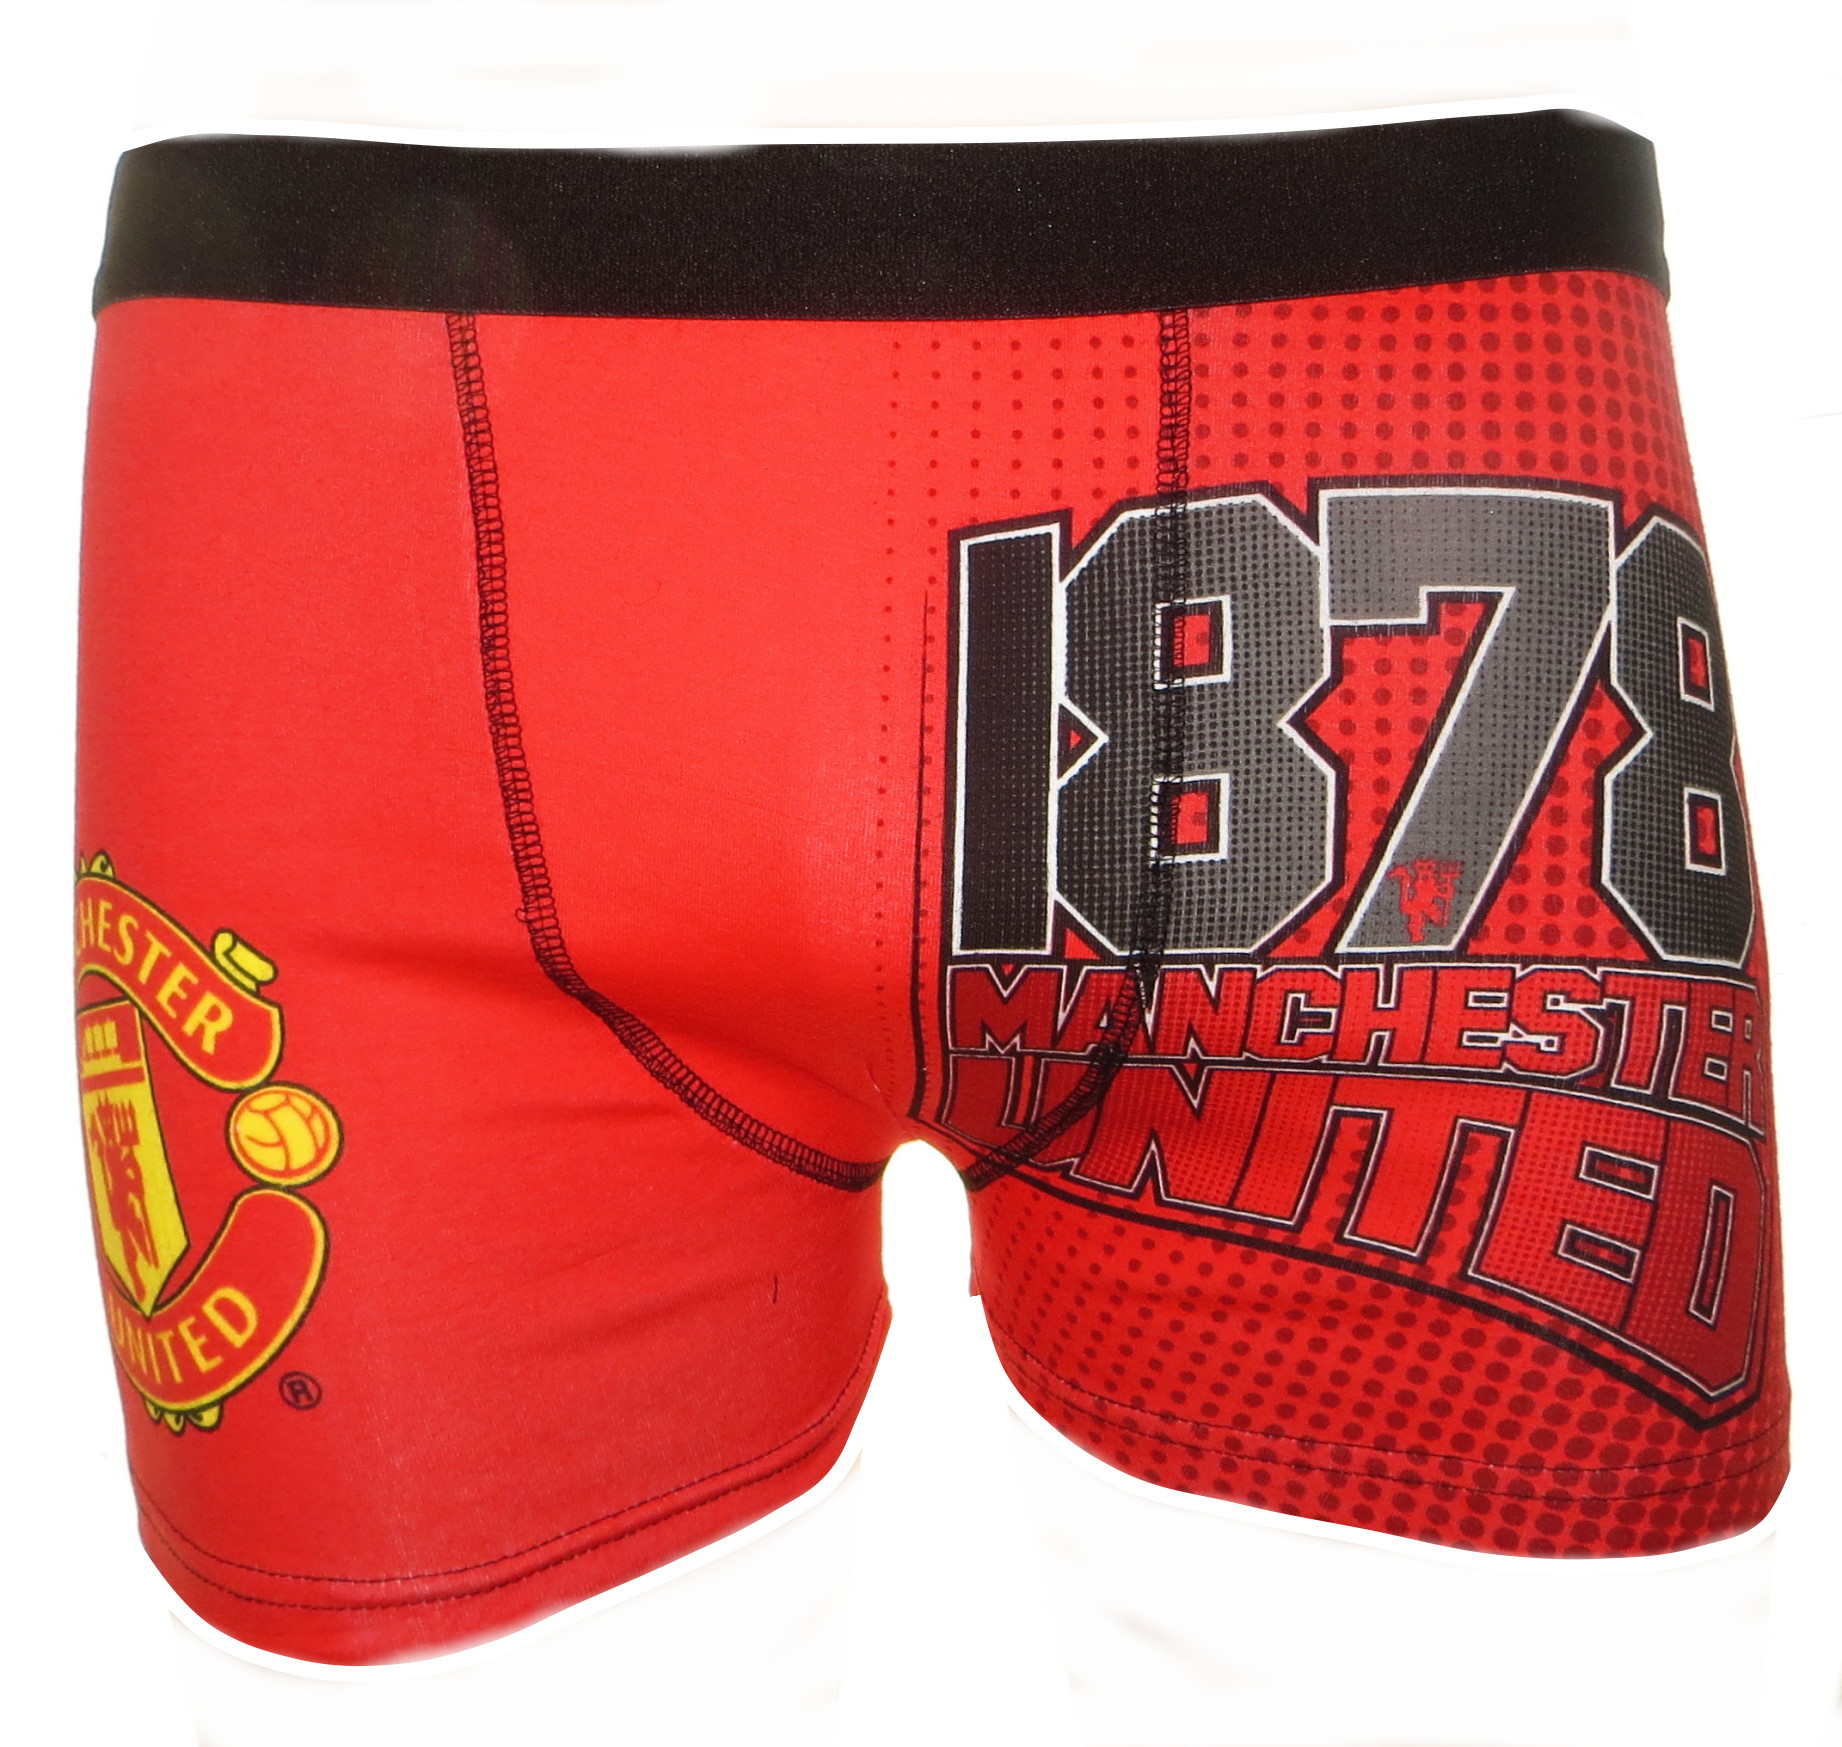 MUFC Boxer Shorts a.JPG  by Thingimijigs